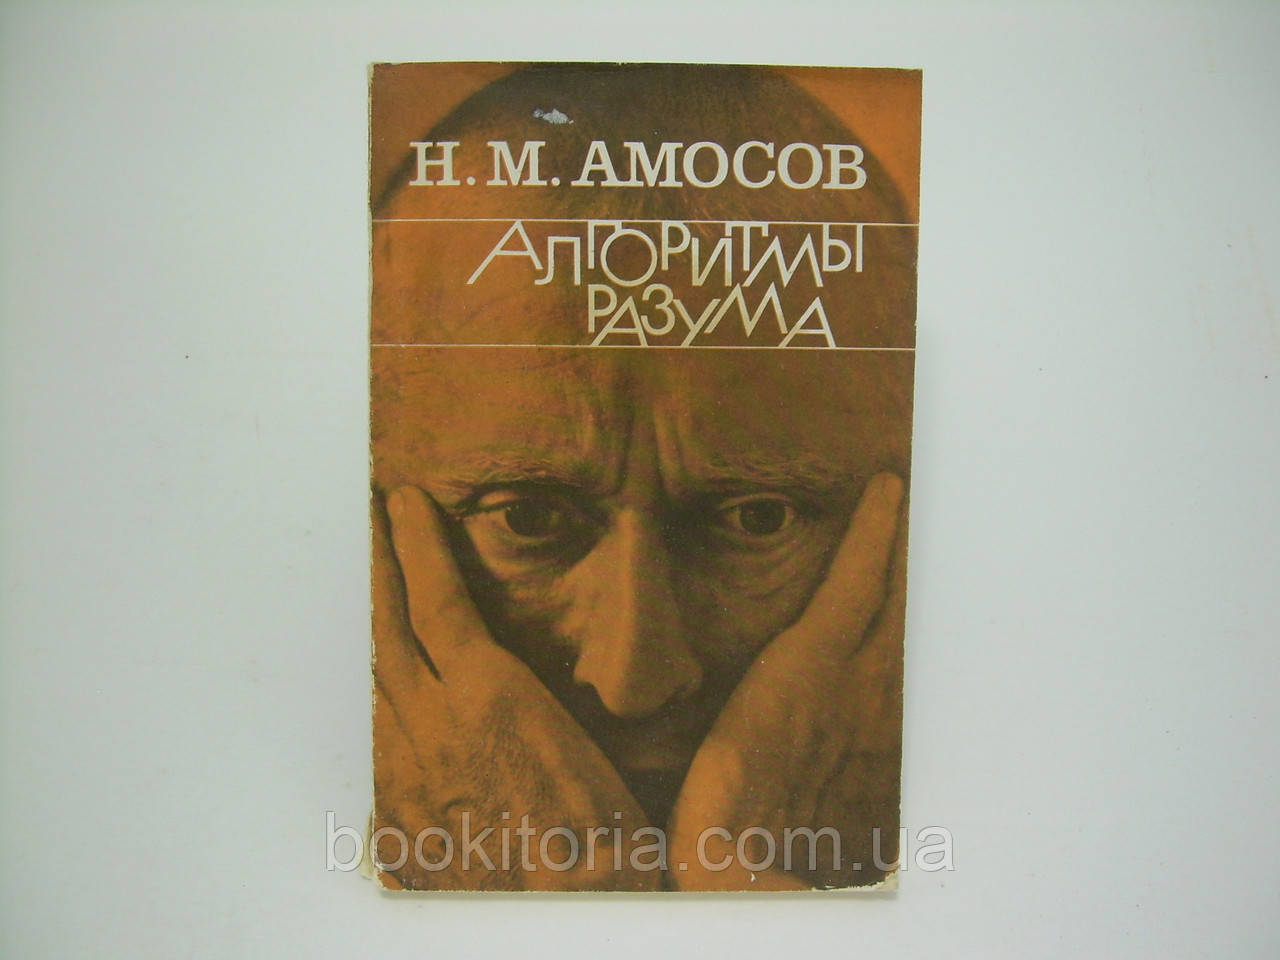 Амосов Н.М. Алгоритми розуму (б/у).